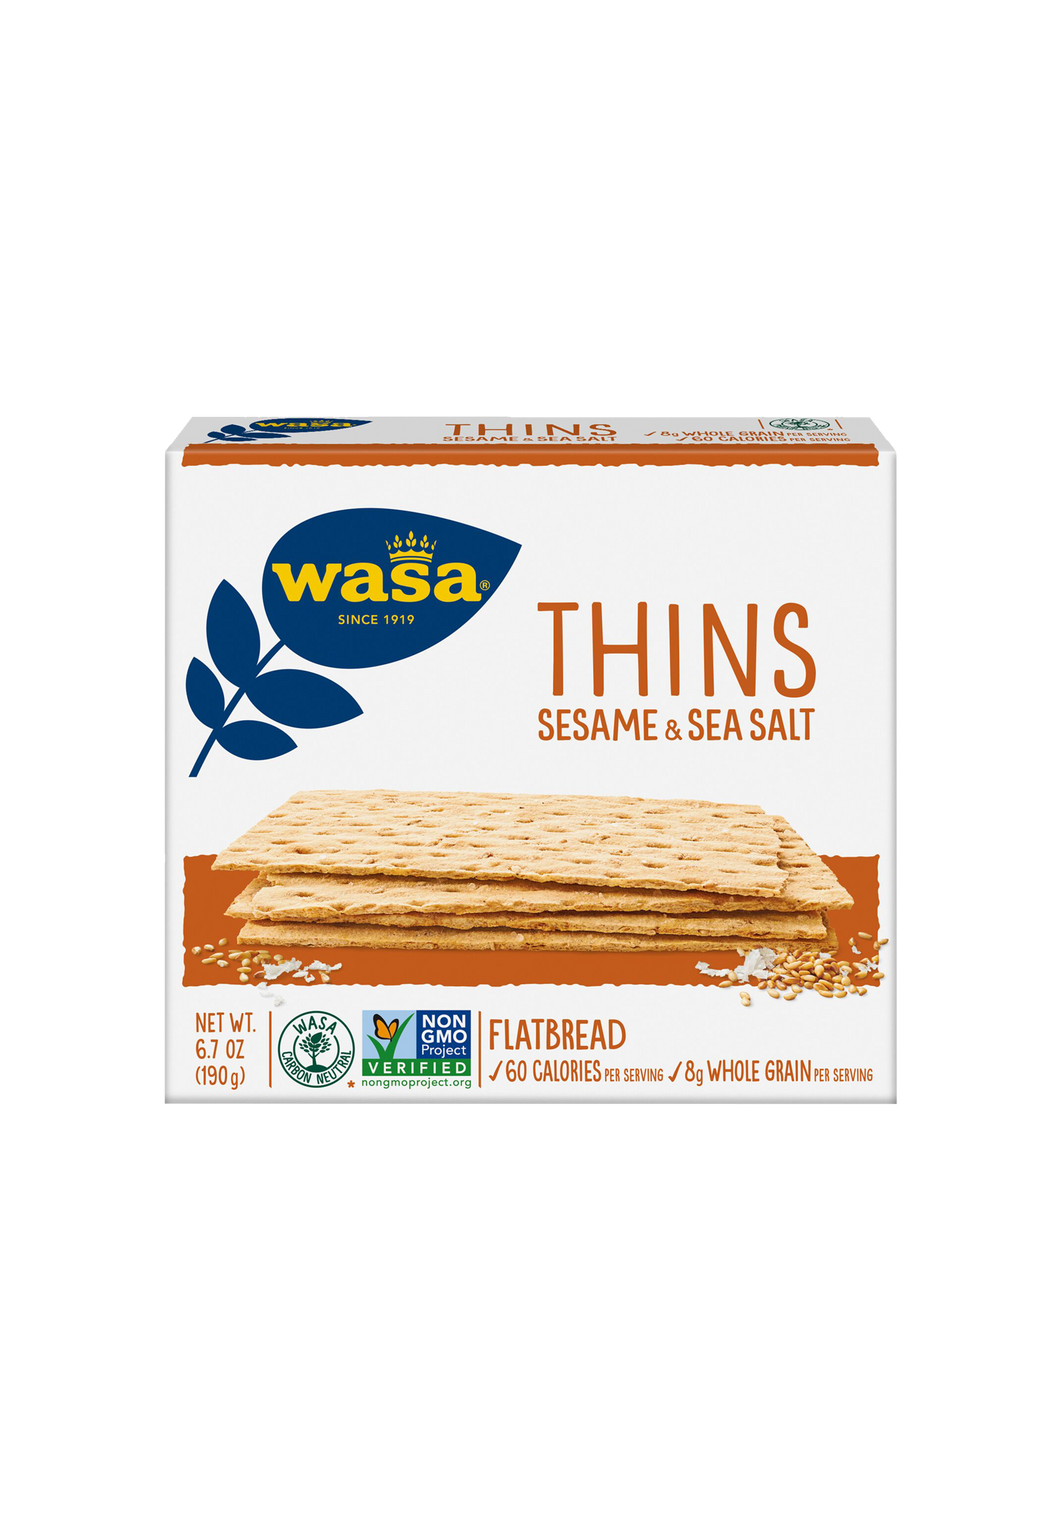 Wasa Thins Sesame & Sea Salt 190g